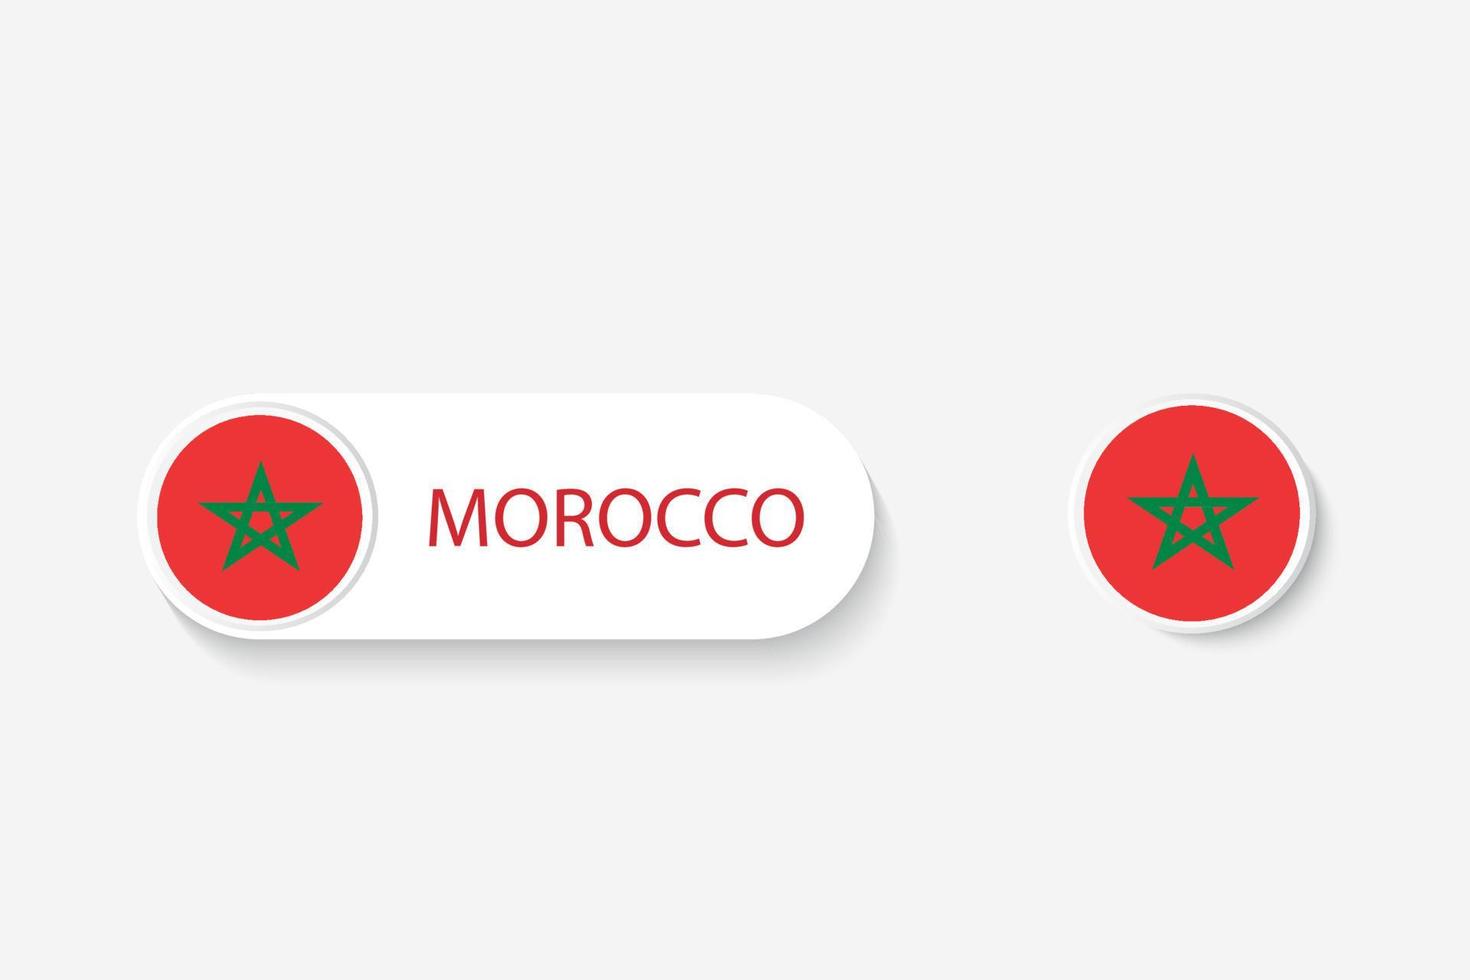 Marokko knop vlag in illustratie van ovaal gevormd met woord van Marokko. en knoopvlag marokko. vector